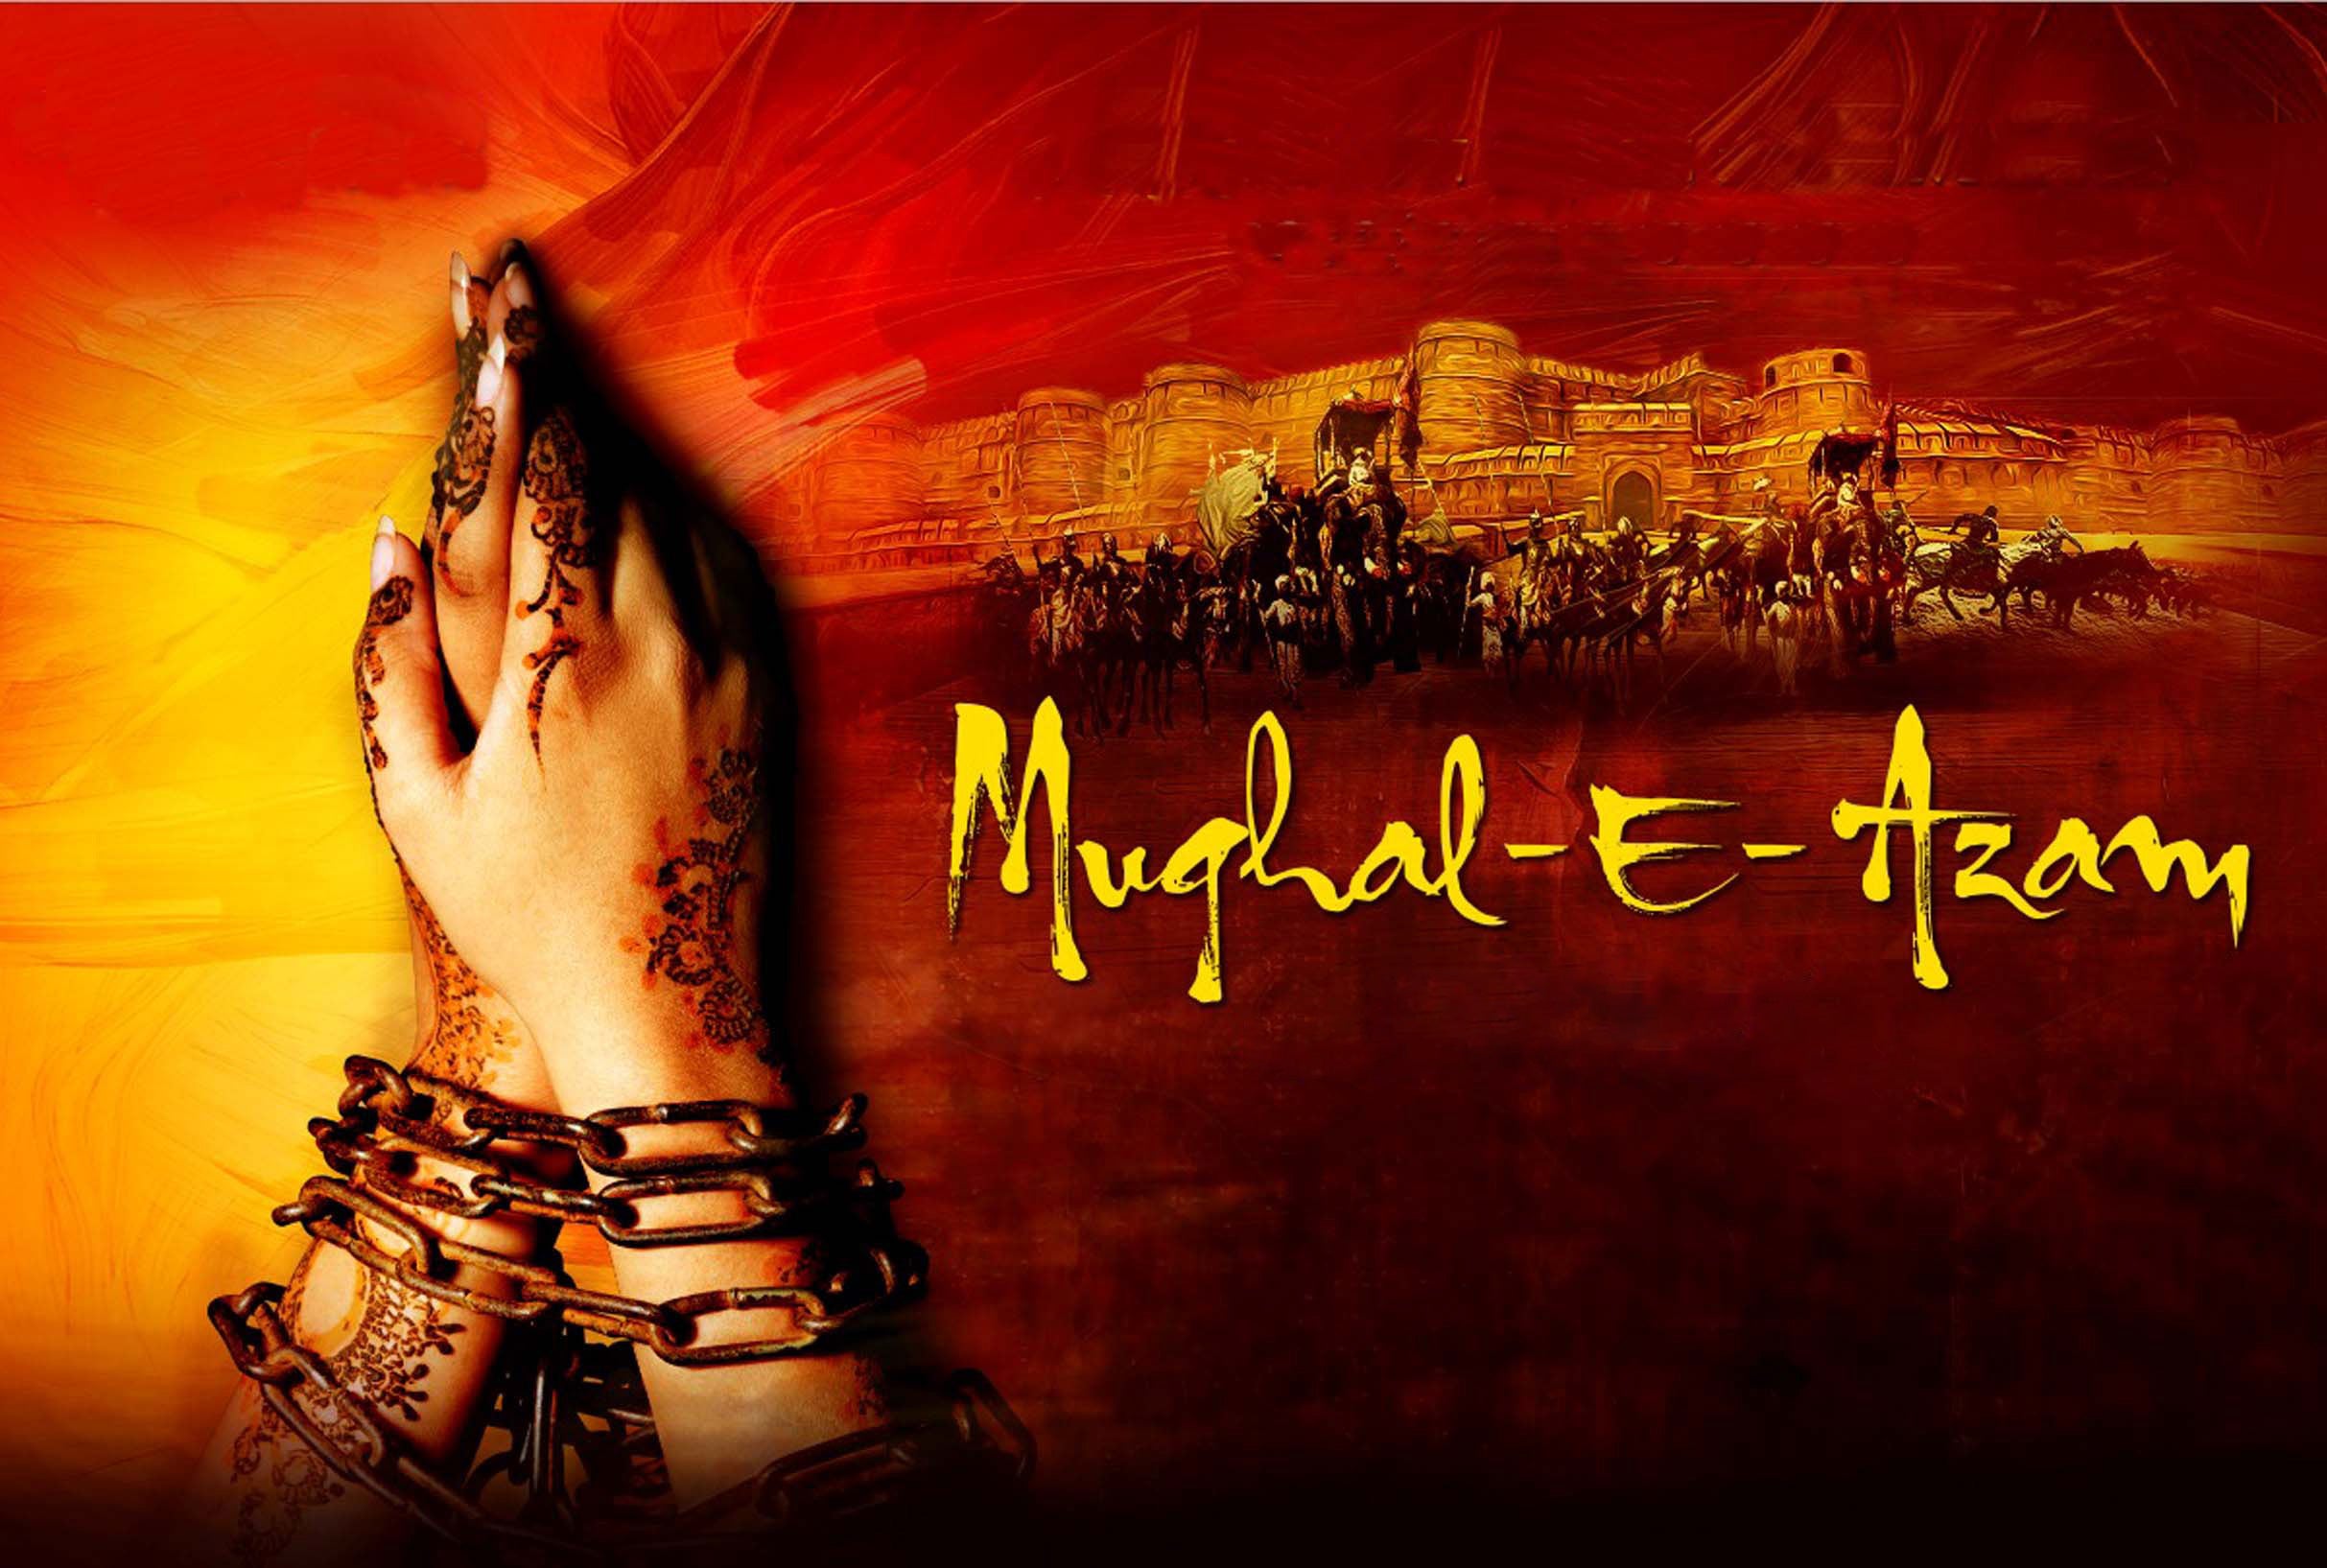 Mughal-E-Azam: The Musical Play